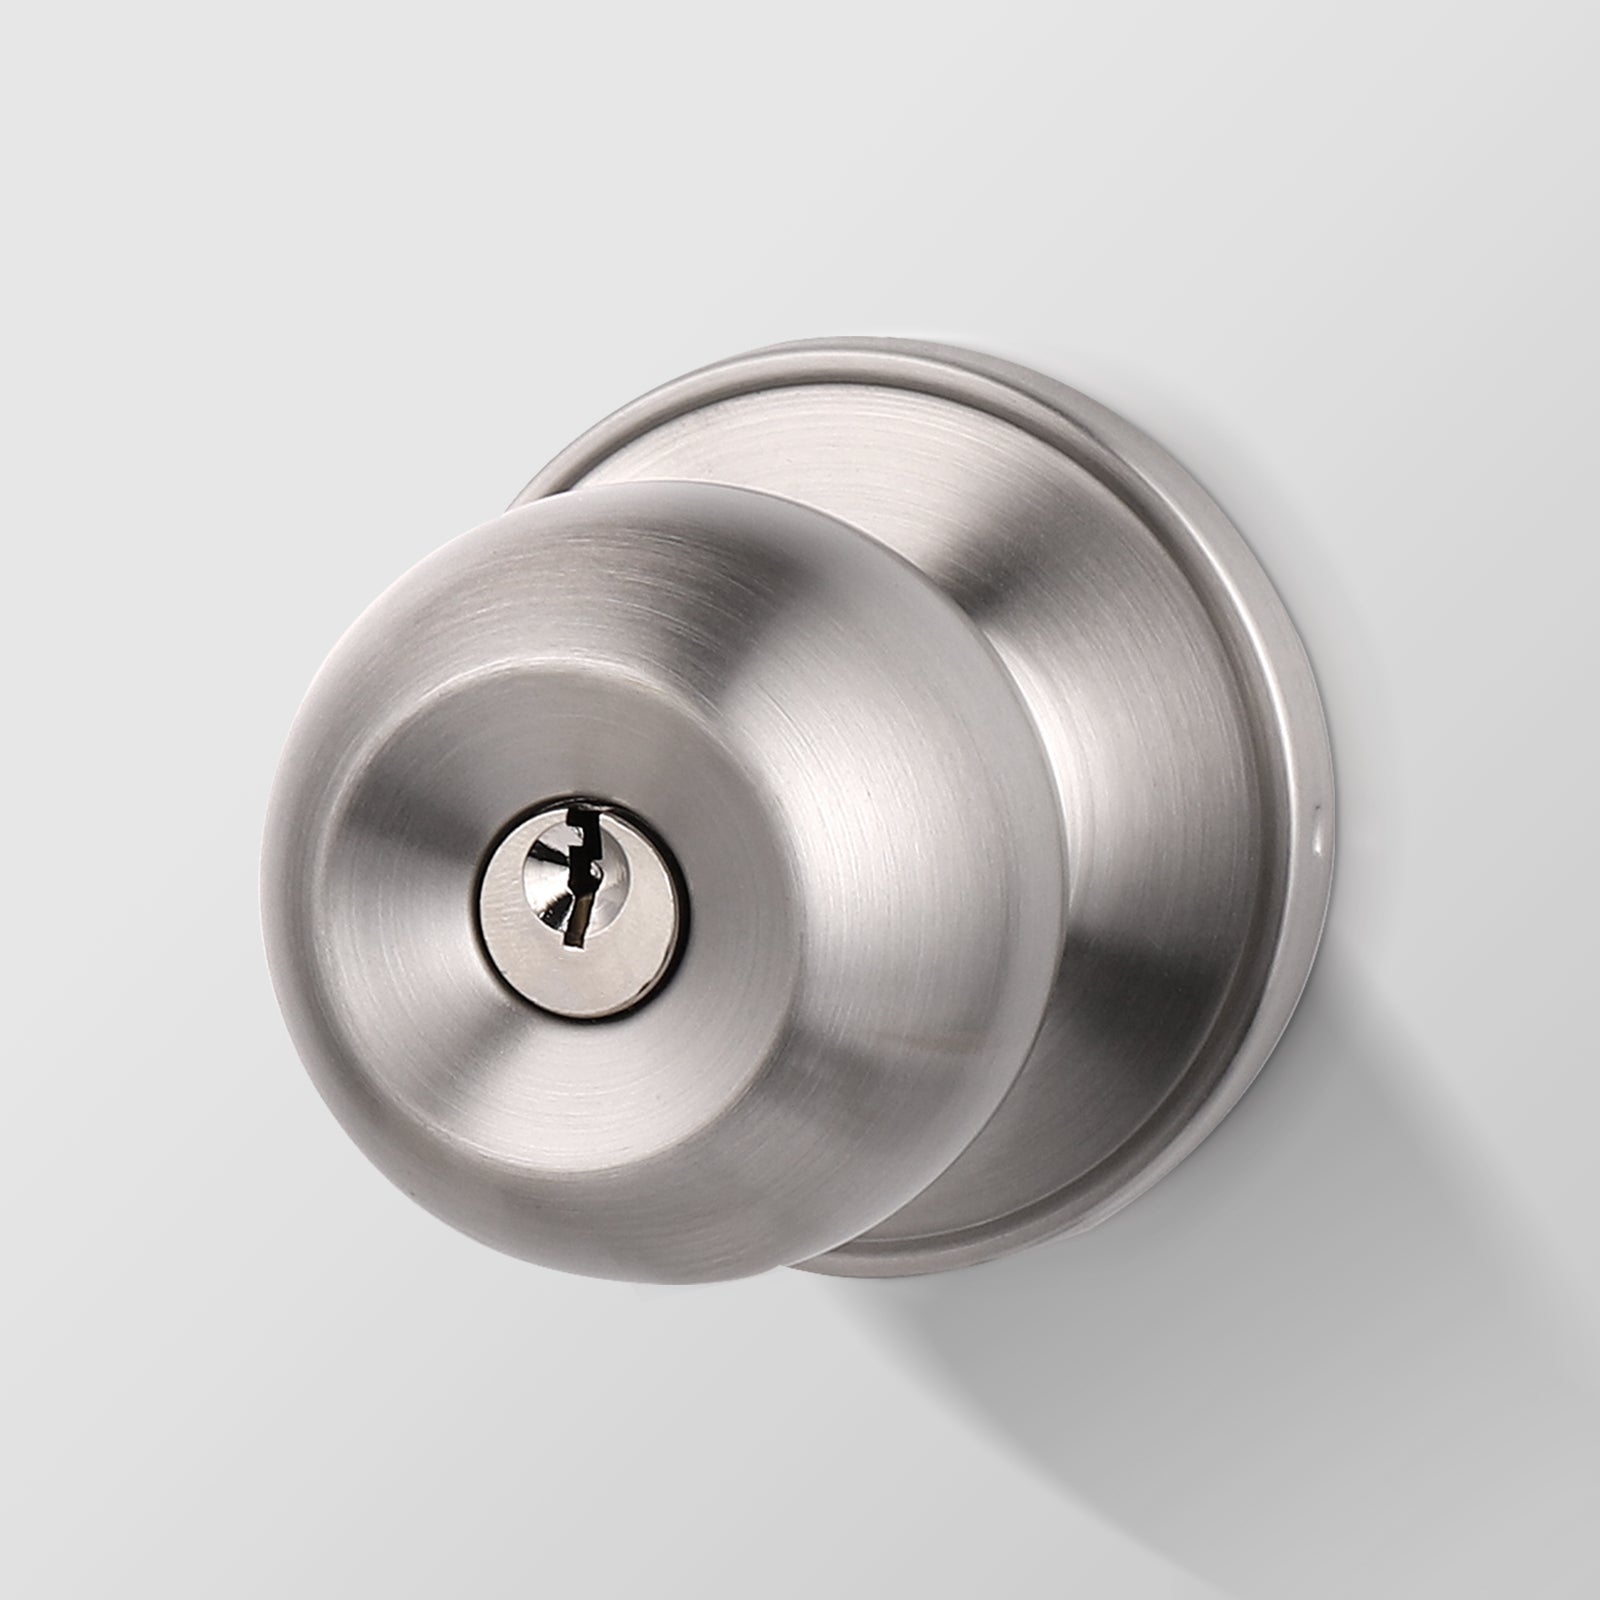 Round Ball Door Knob Lock with Single Cylinder Deadbolt Entry Keyed Lockset Satin Nickel Finish - Keyed Alike DL607ET-101SN